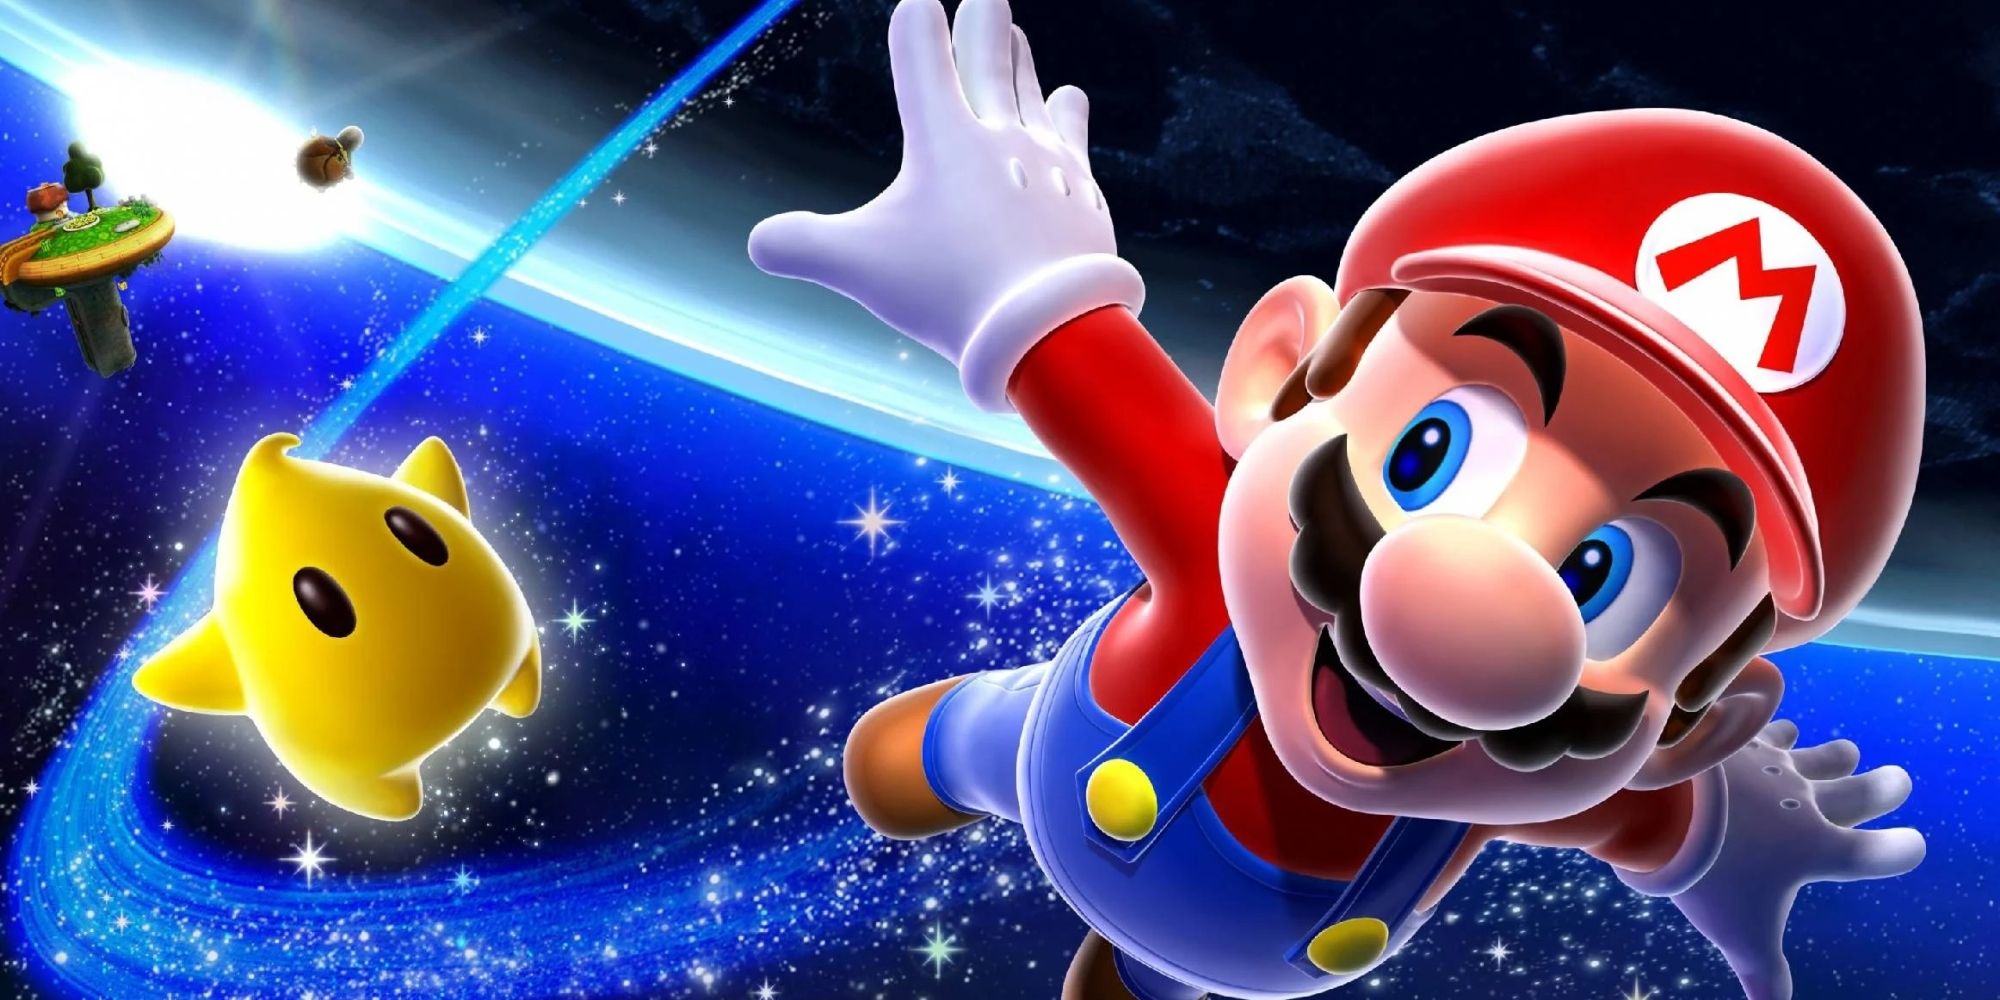 Mario and a luma from Super Mario Galaxy